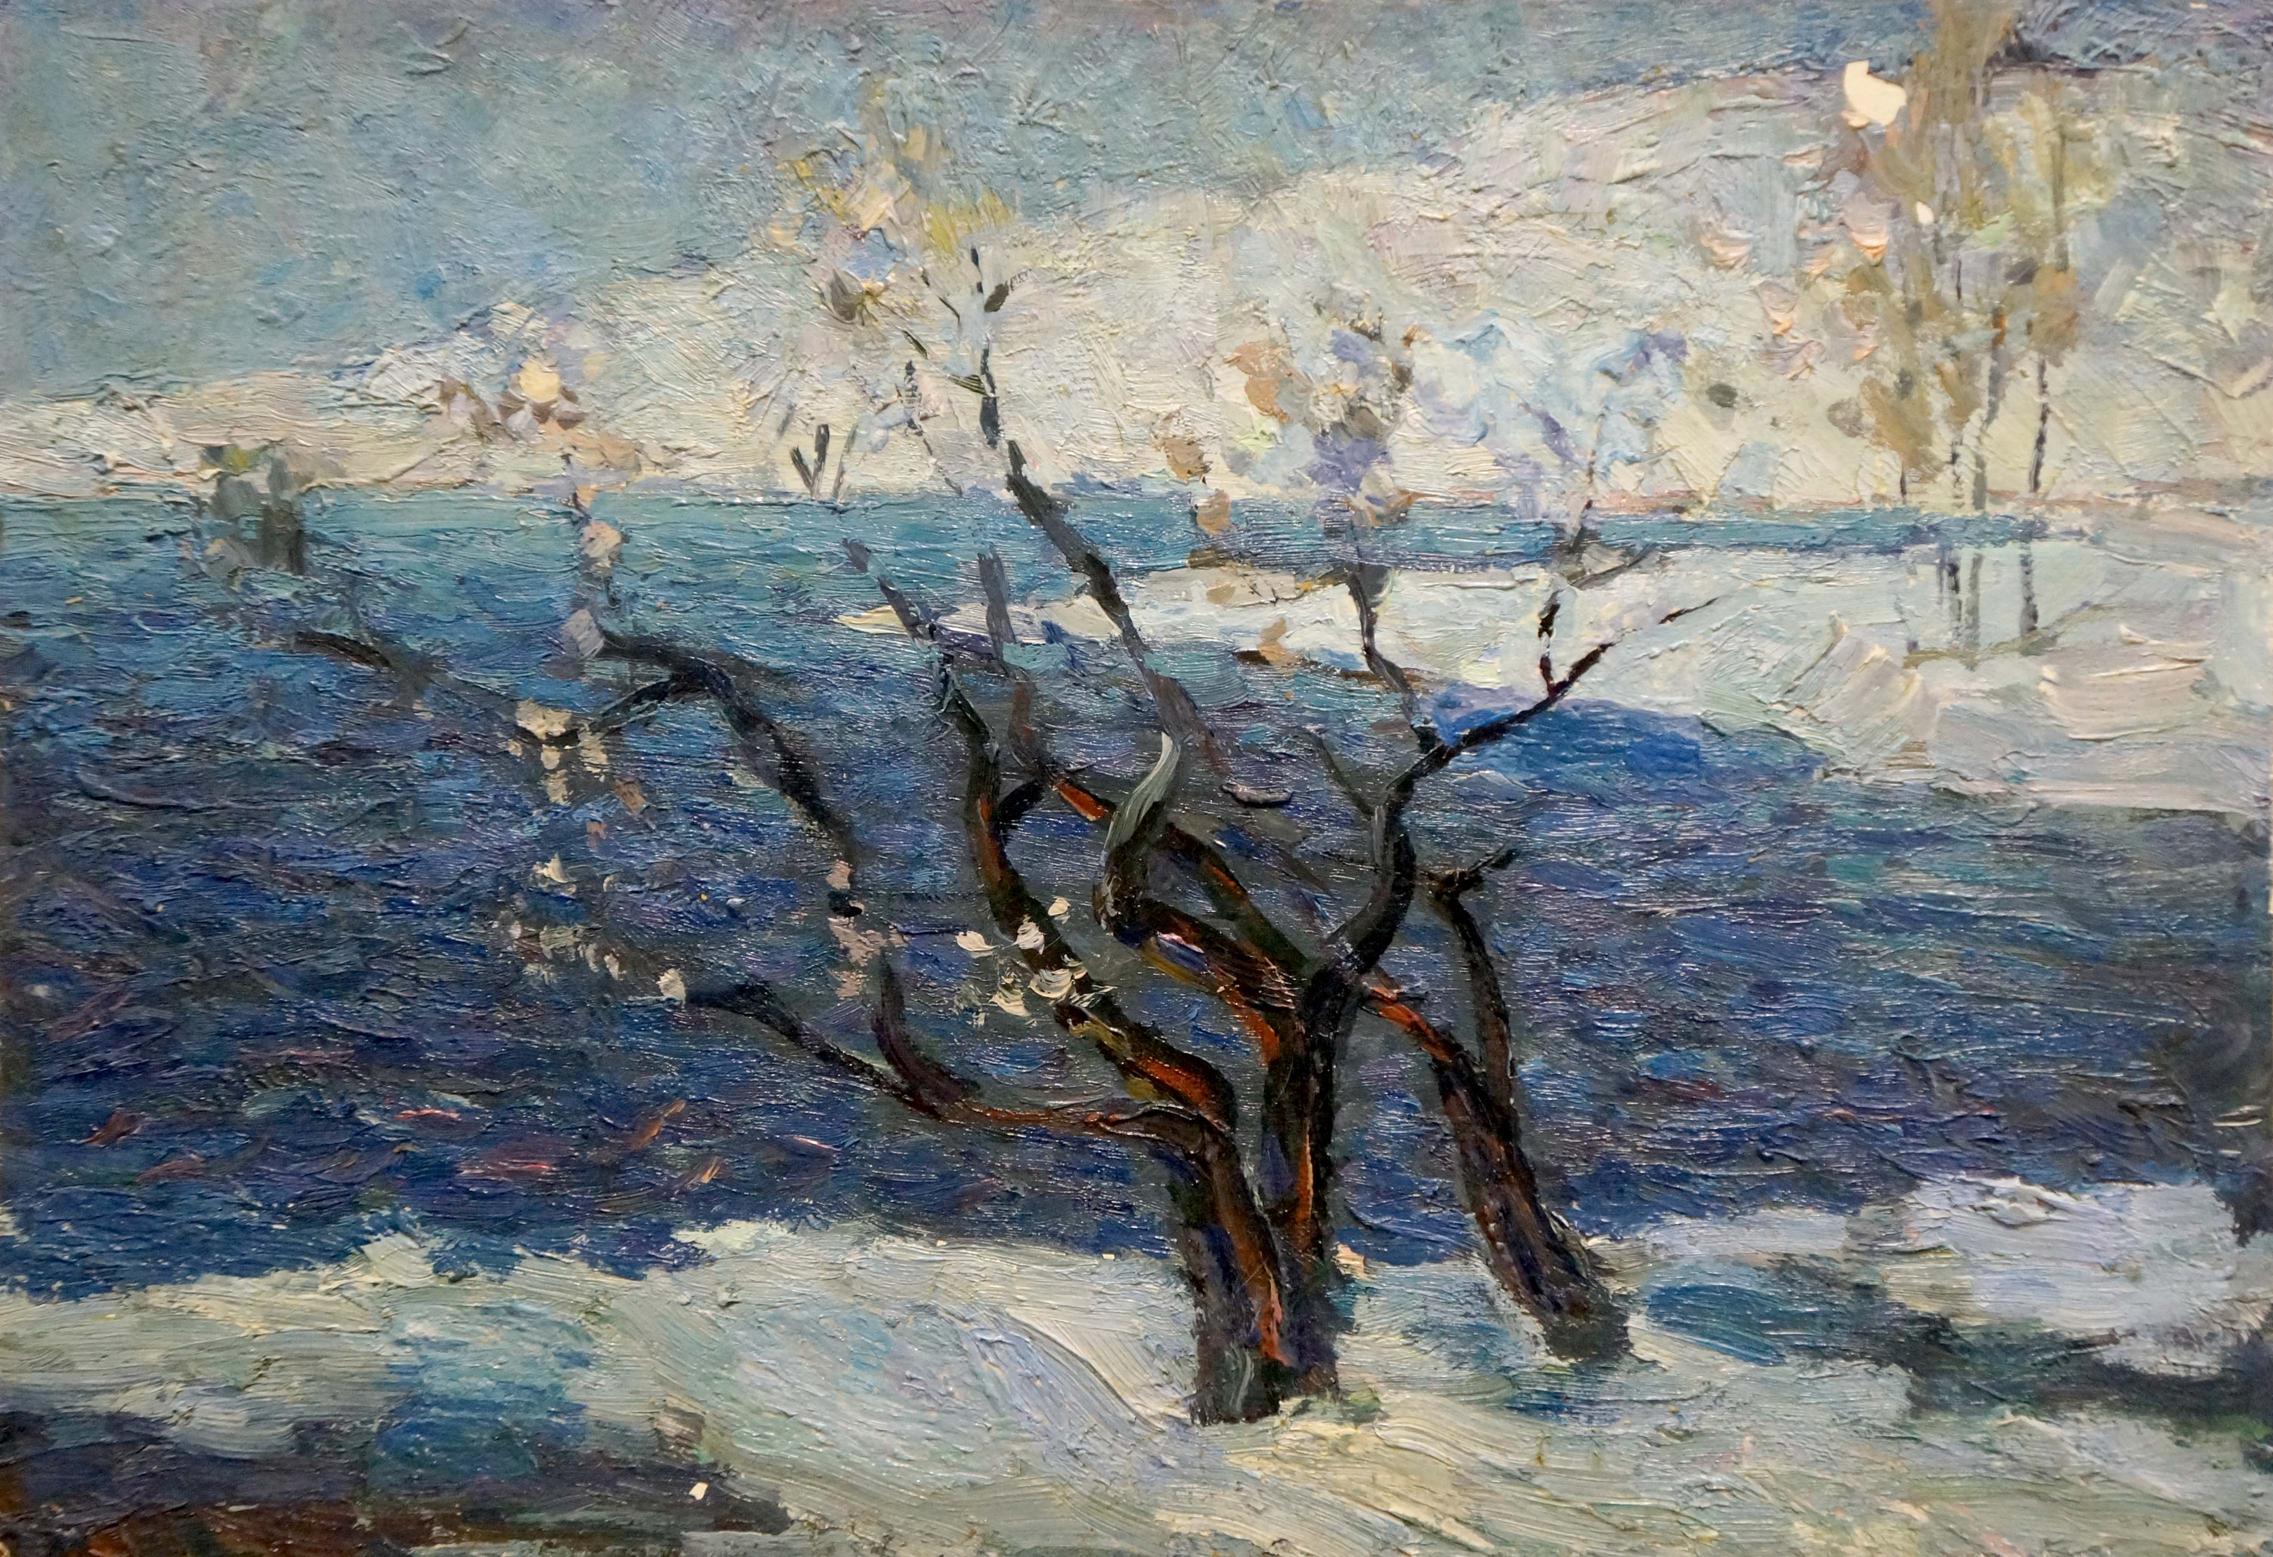 Oil painting Cold day Stremsky Alexander Ivanovich